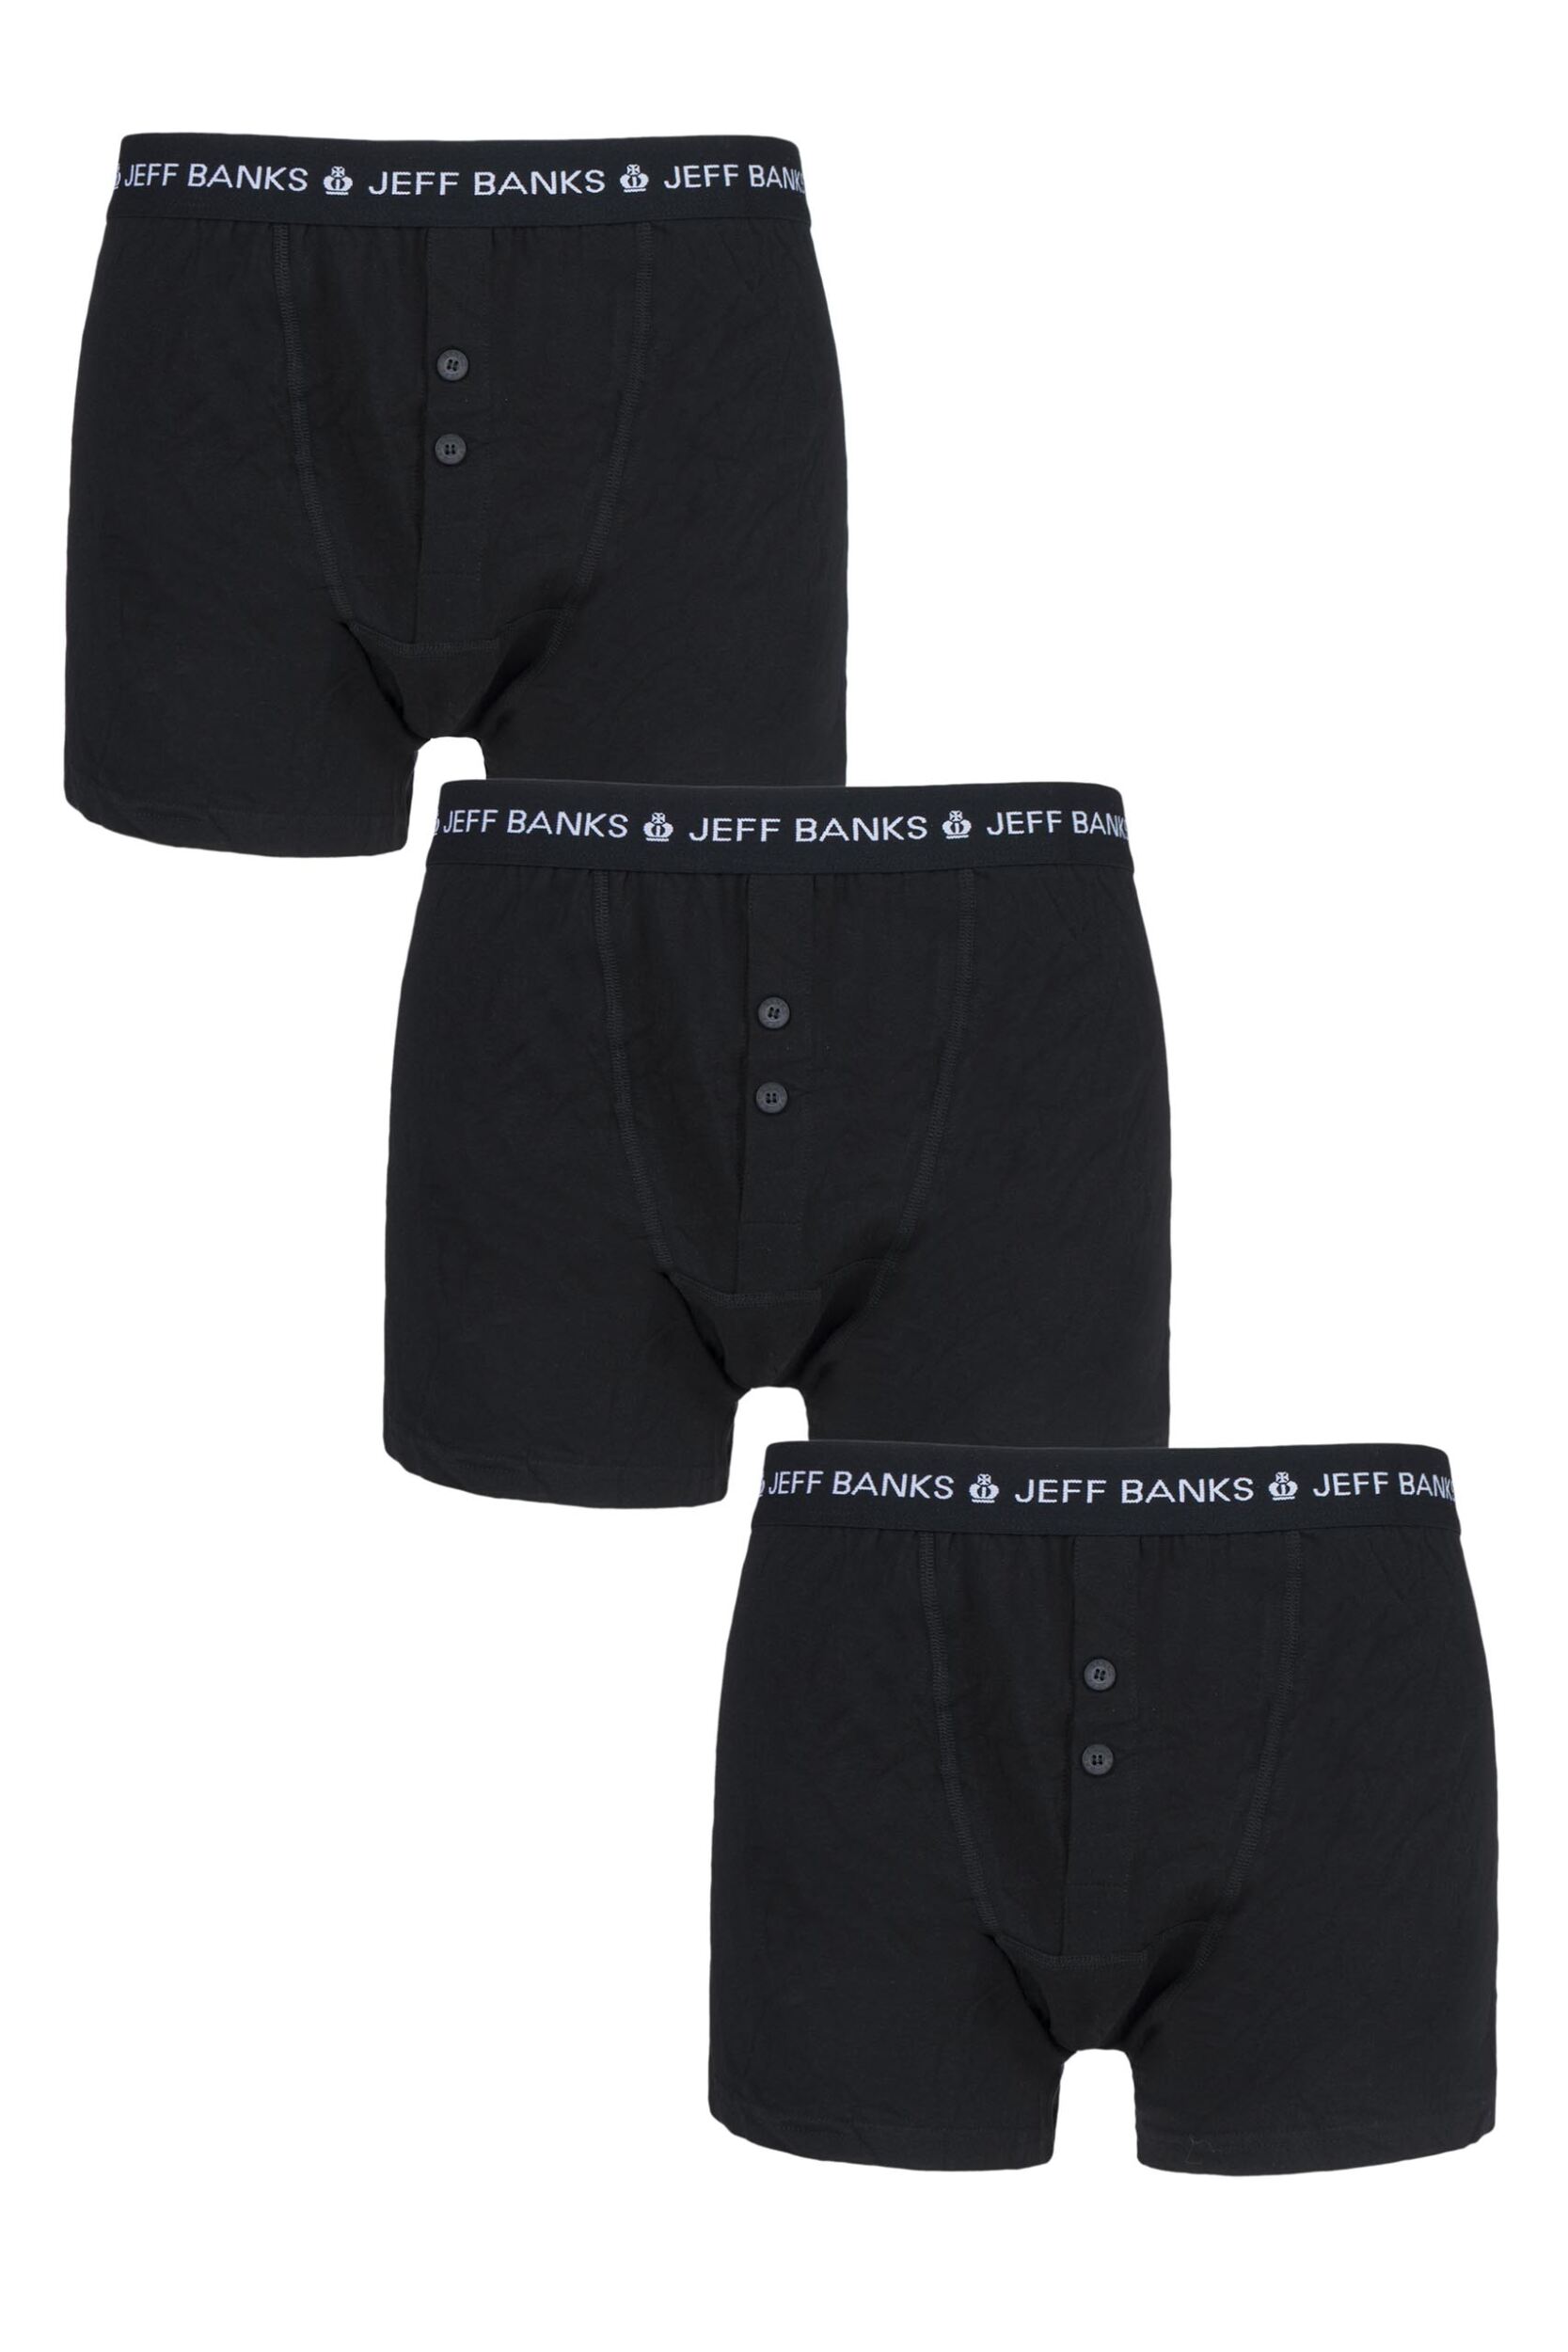 3 Pack Black Marlow Buttoned Boxer Shorts Men's Medium - Jeff Banks